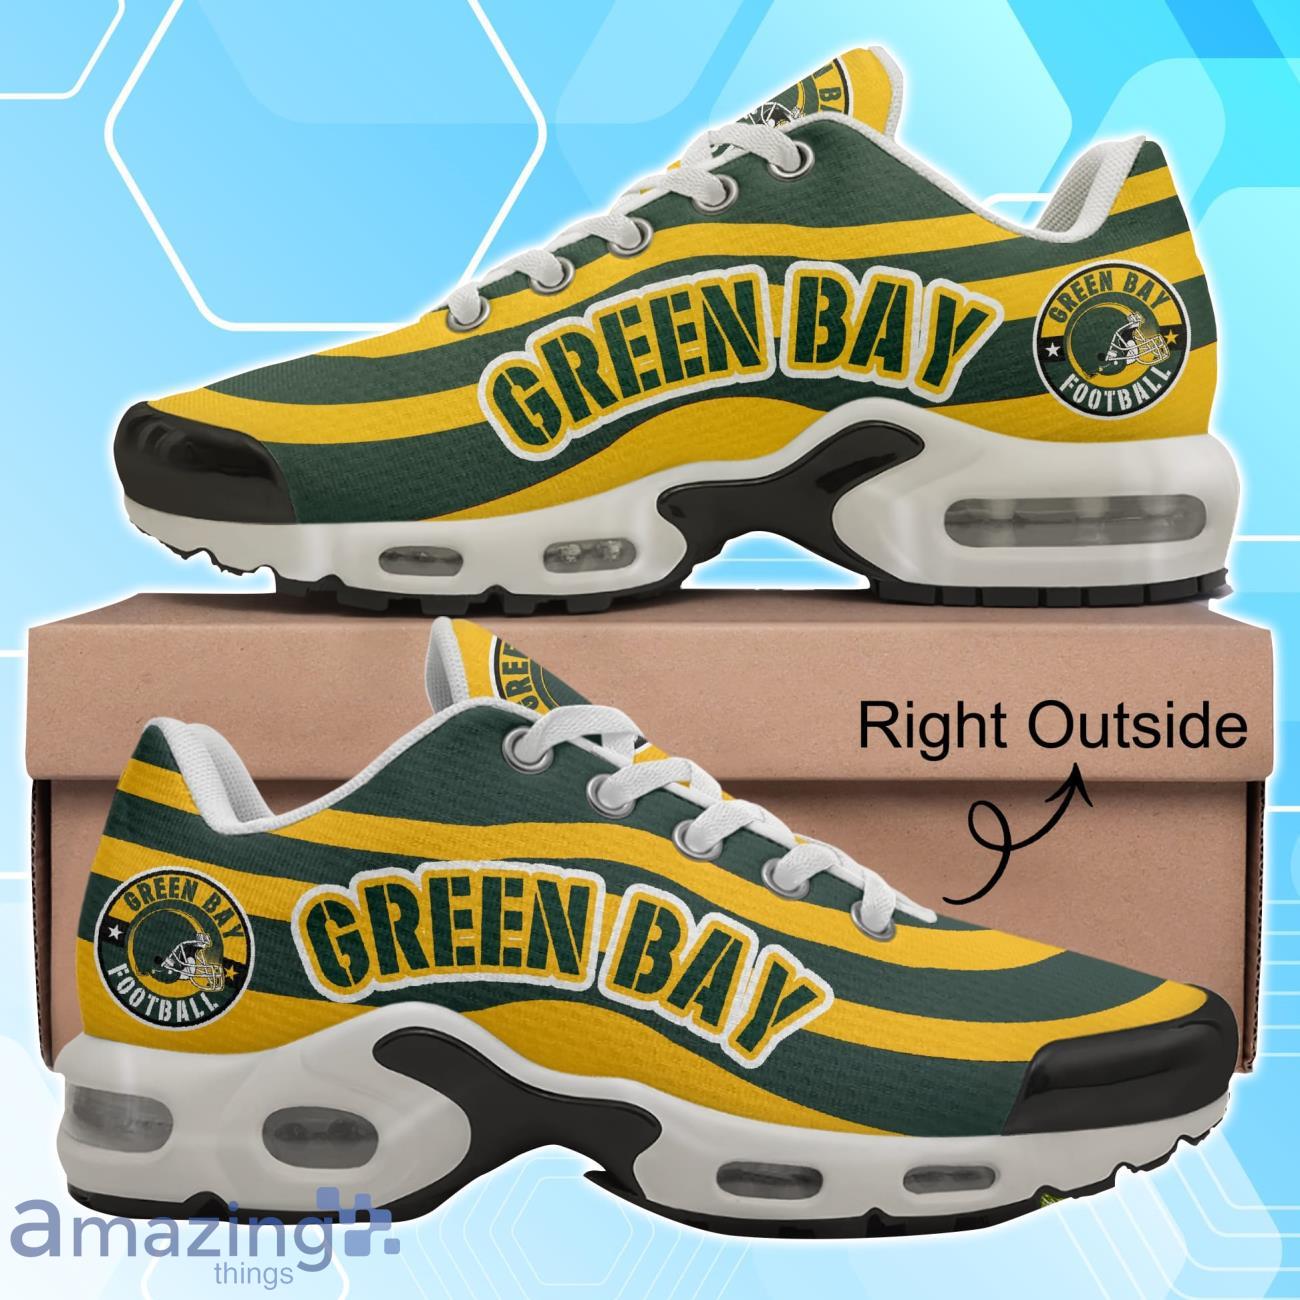 Green Bay Football Air Cushion Shoes Product Photo 1